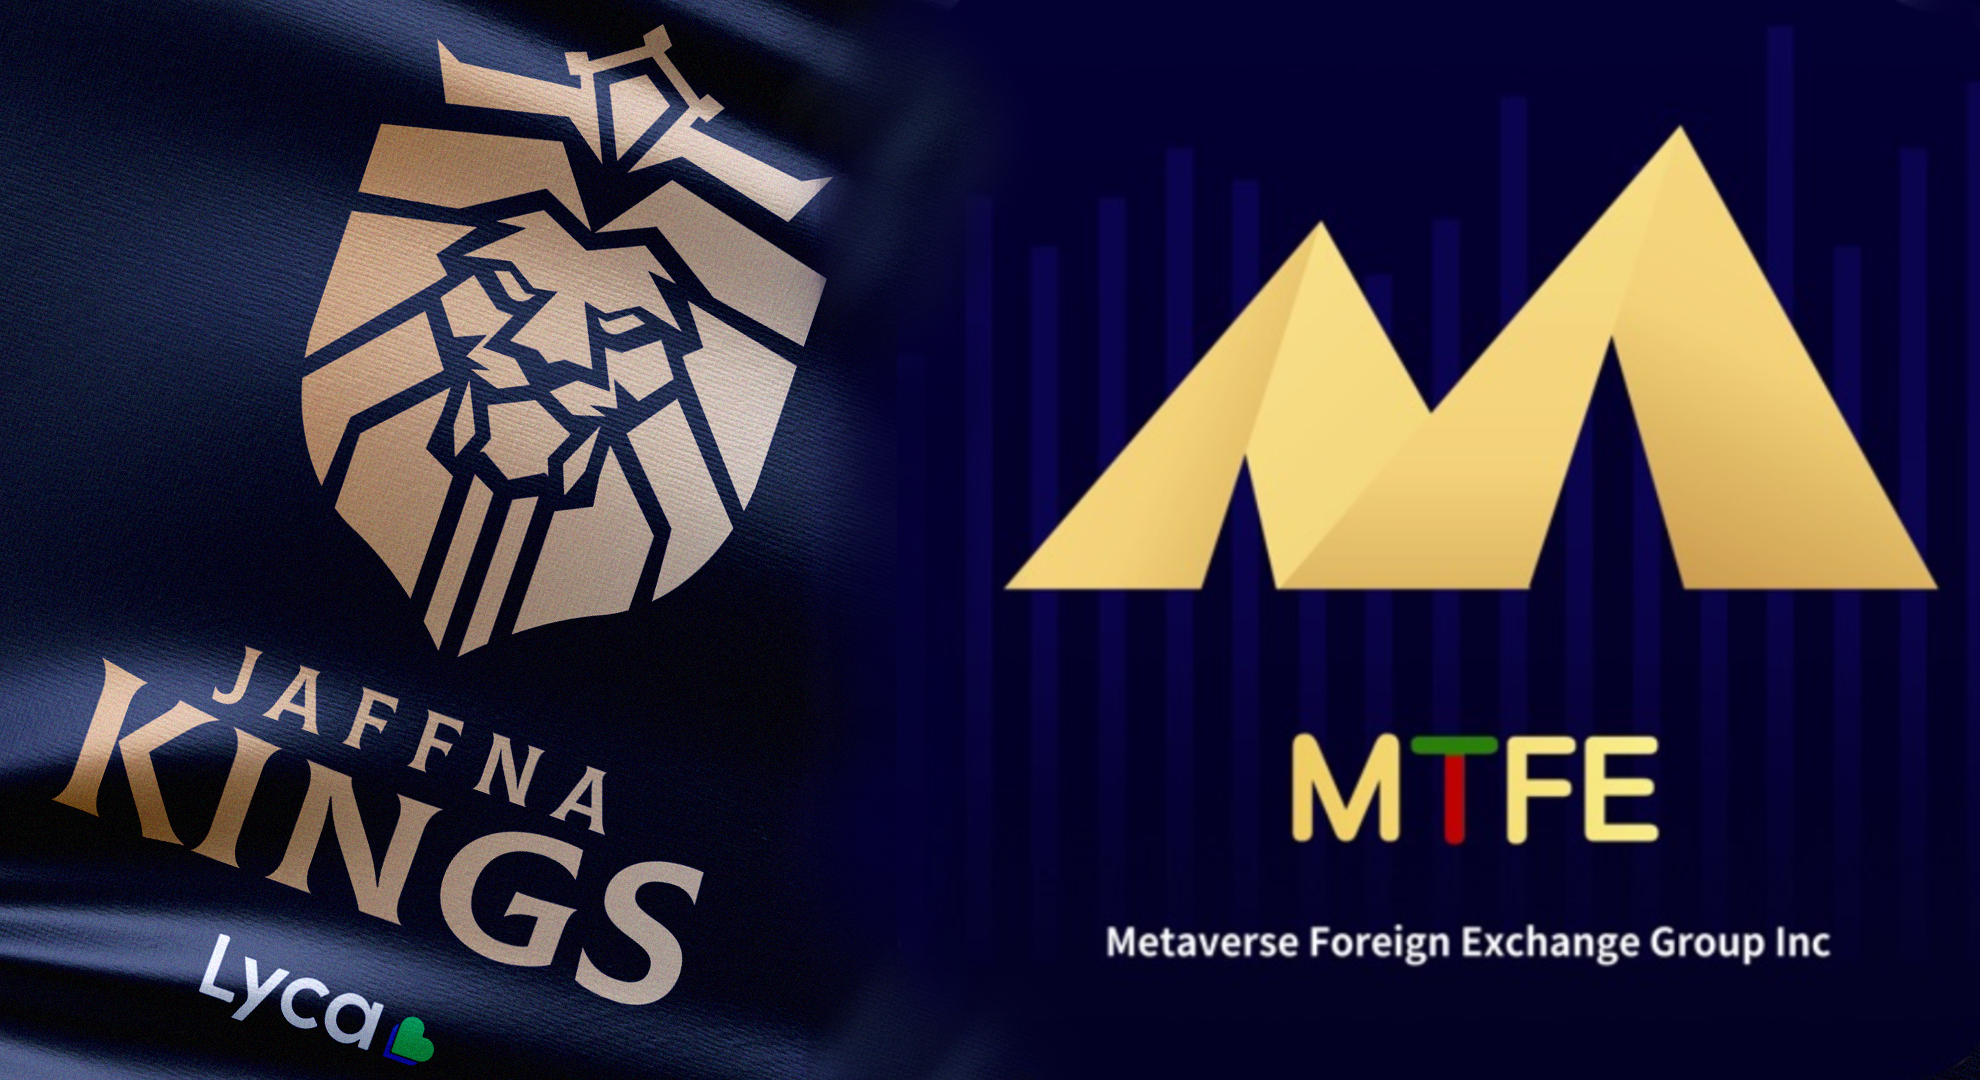 JAFFNA KINGS වෙත දුන් අනුග්‍රහය MTFE SL GROUP හකුලා ගනී- MTFE SL GROUP withdraws sponsorship to Jaffna Kings